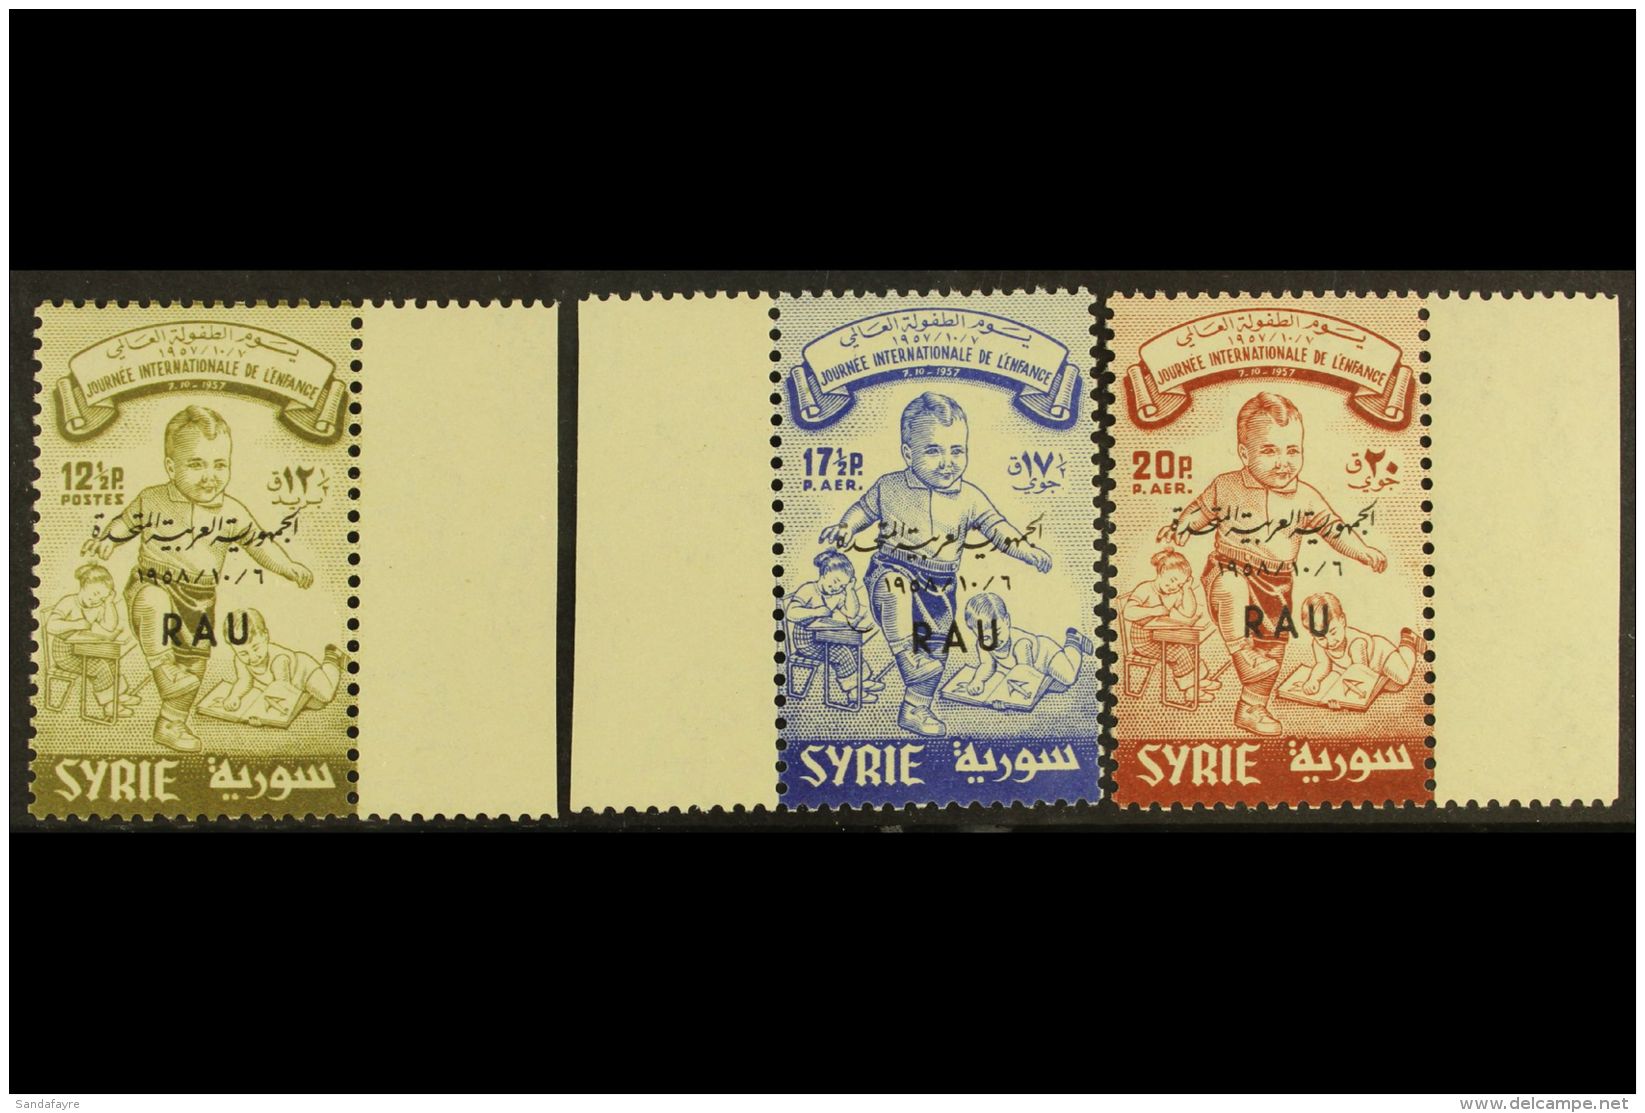 1958 International Children's Day "RAU" Overprints Complete Set, SG 670a/70c, Fine Never Hinged Mint Marginal... - Syrie